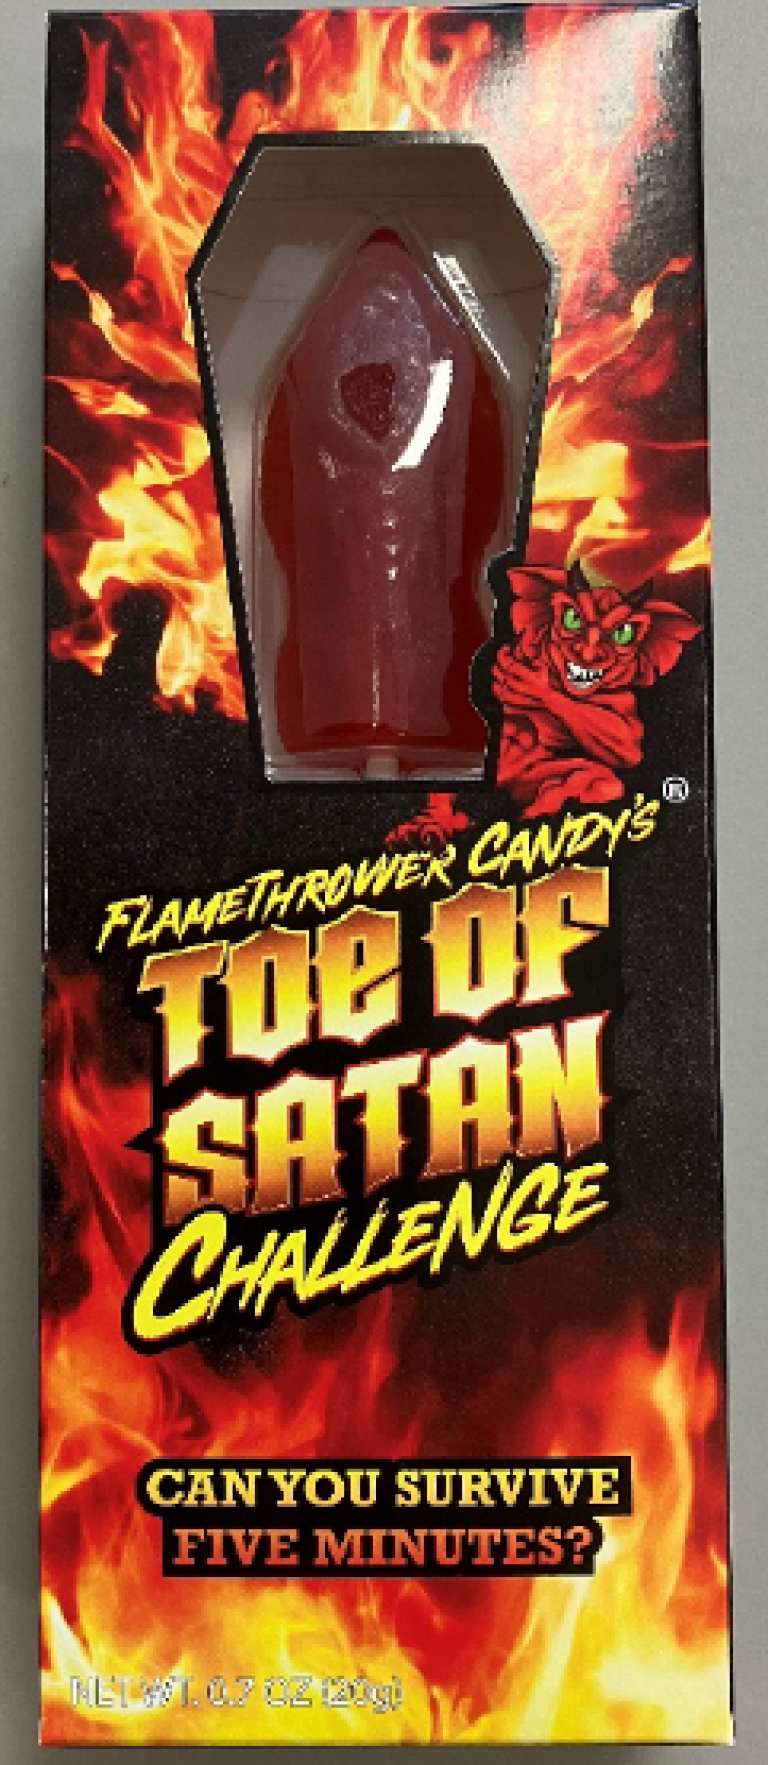 Emballasje for Toe of Satan med påskriften "Can you survive five minutes?"